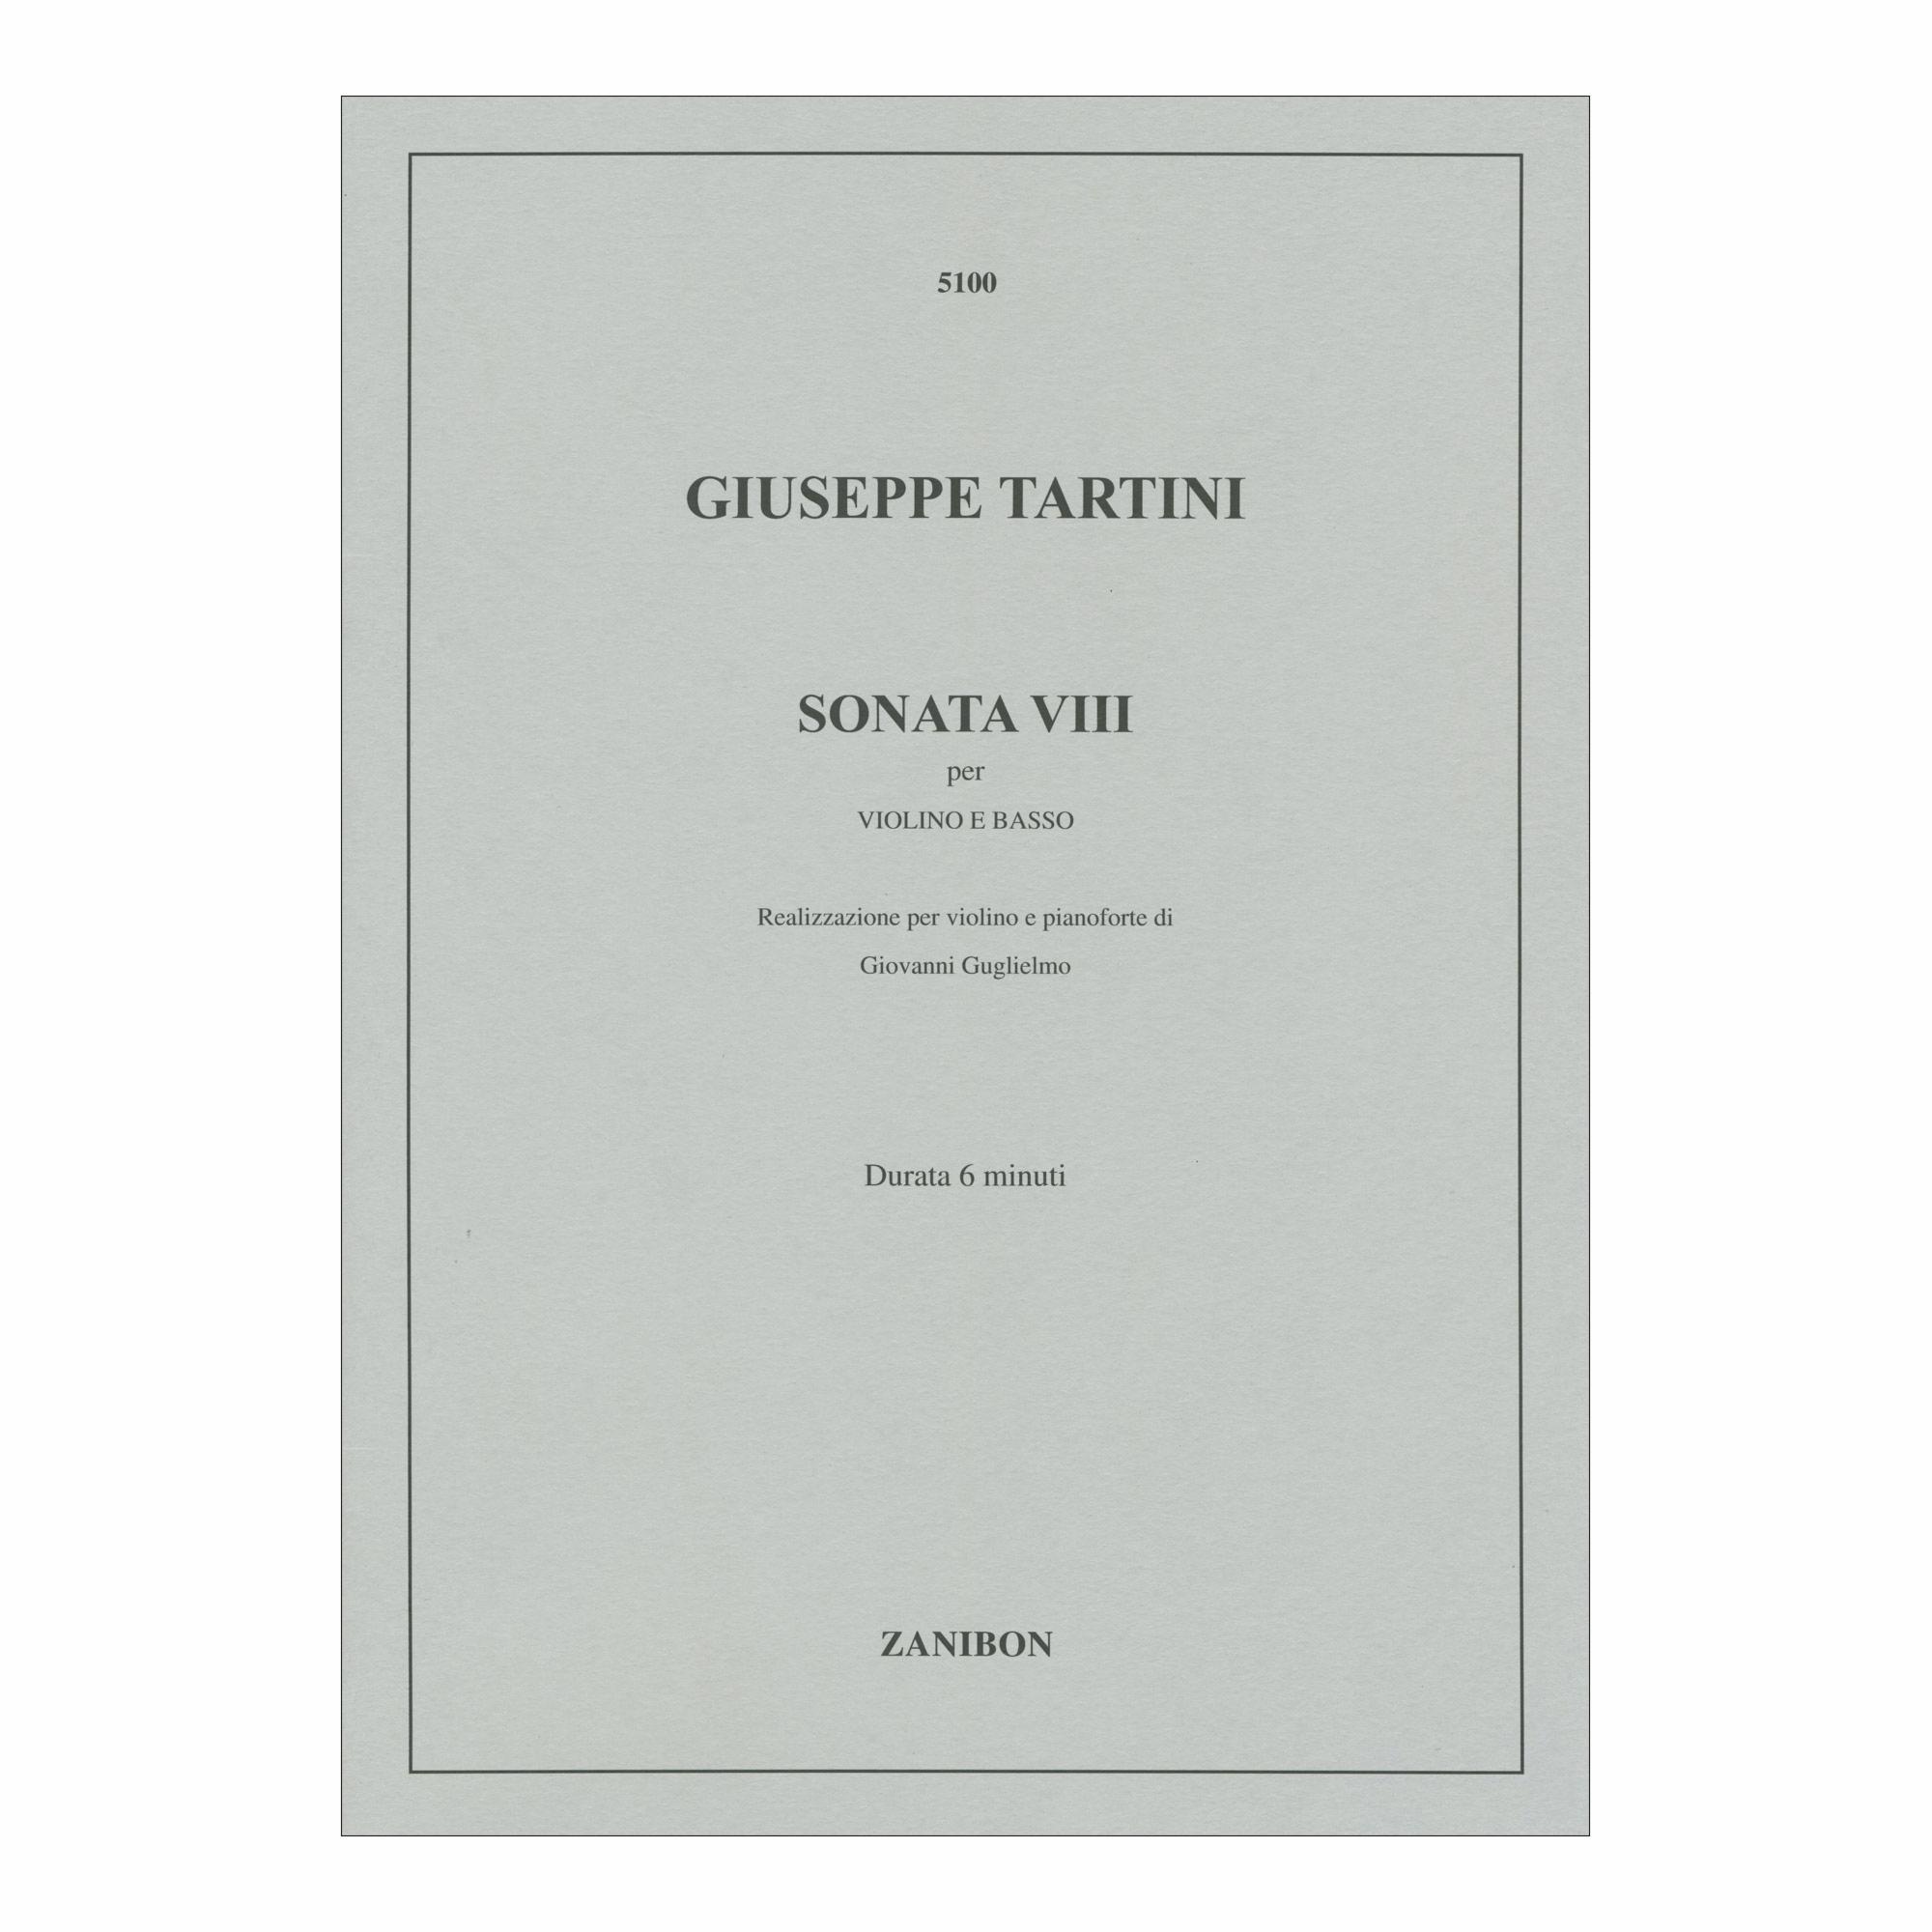 Sonata No. 8 for Violin and Piano